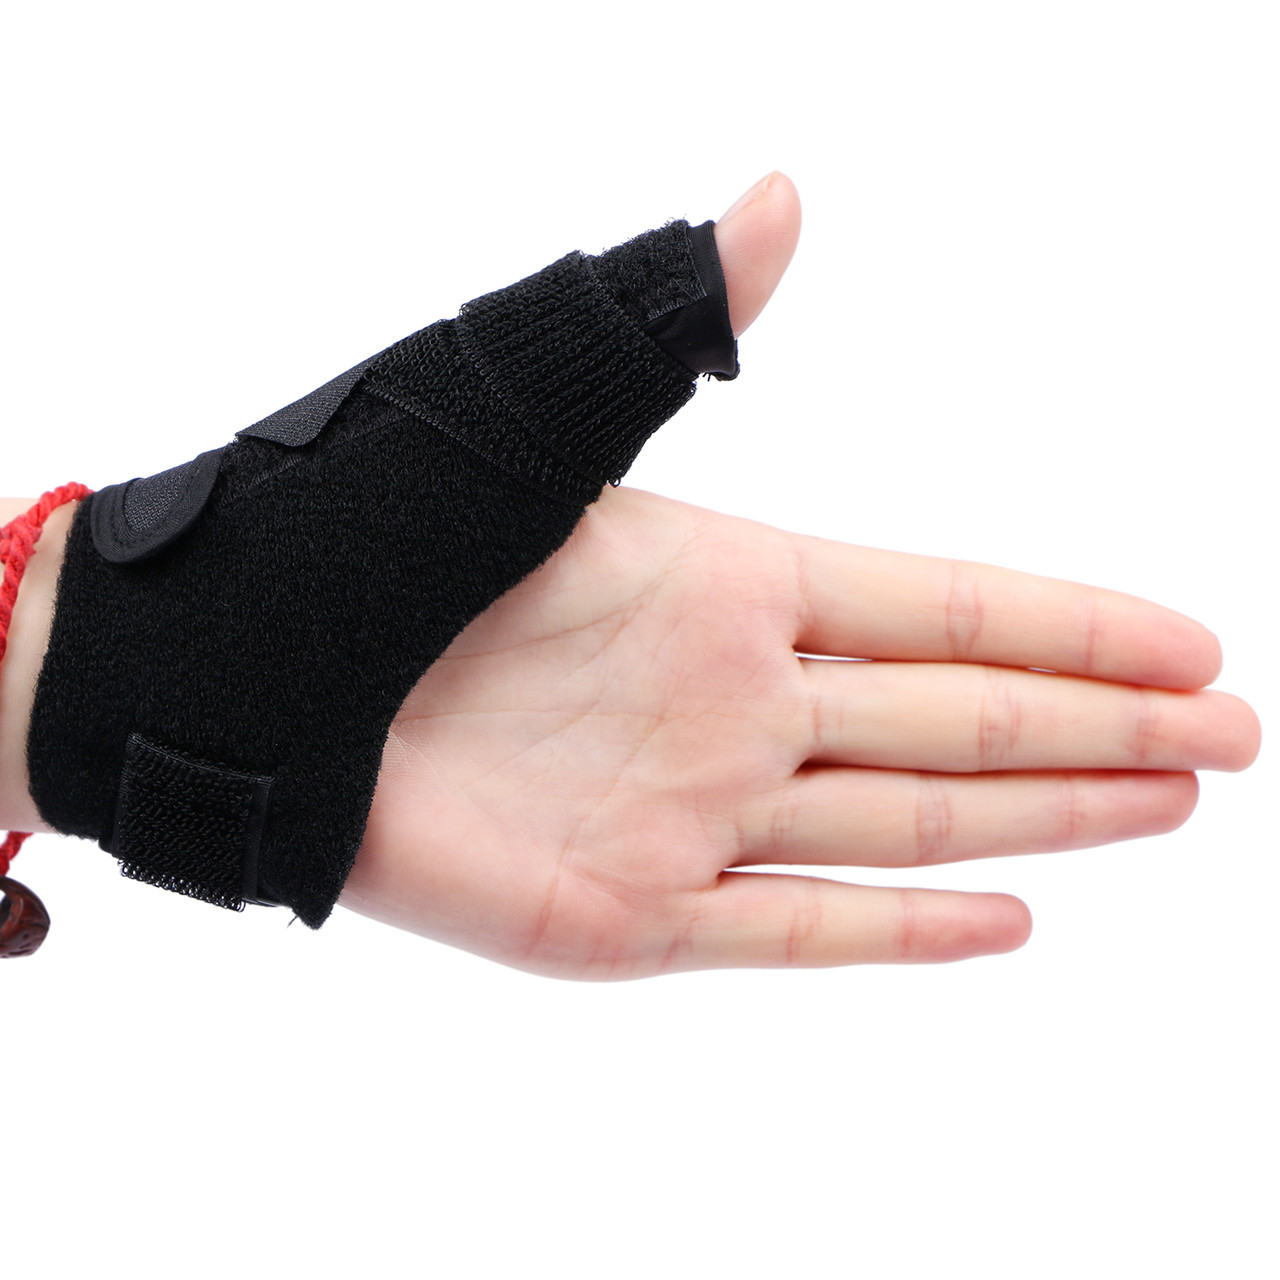 Thumb Splint- FDA Approved Thumb Spica Splin